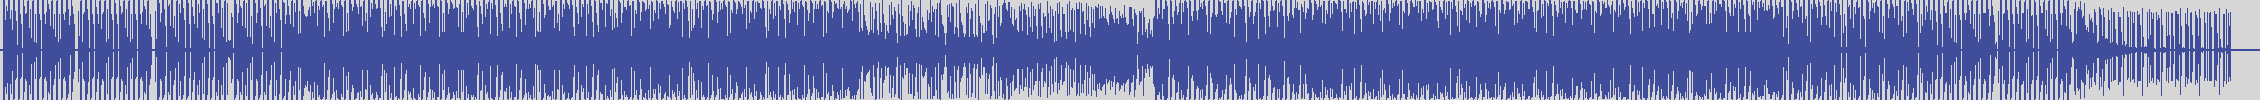 nf_boyz_records [NFY019] Edgard Mine - Jump [Party Mix] audio wave form